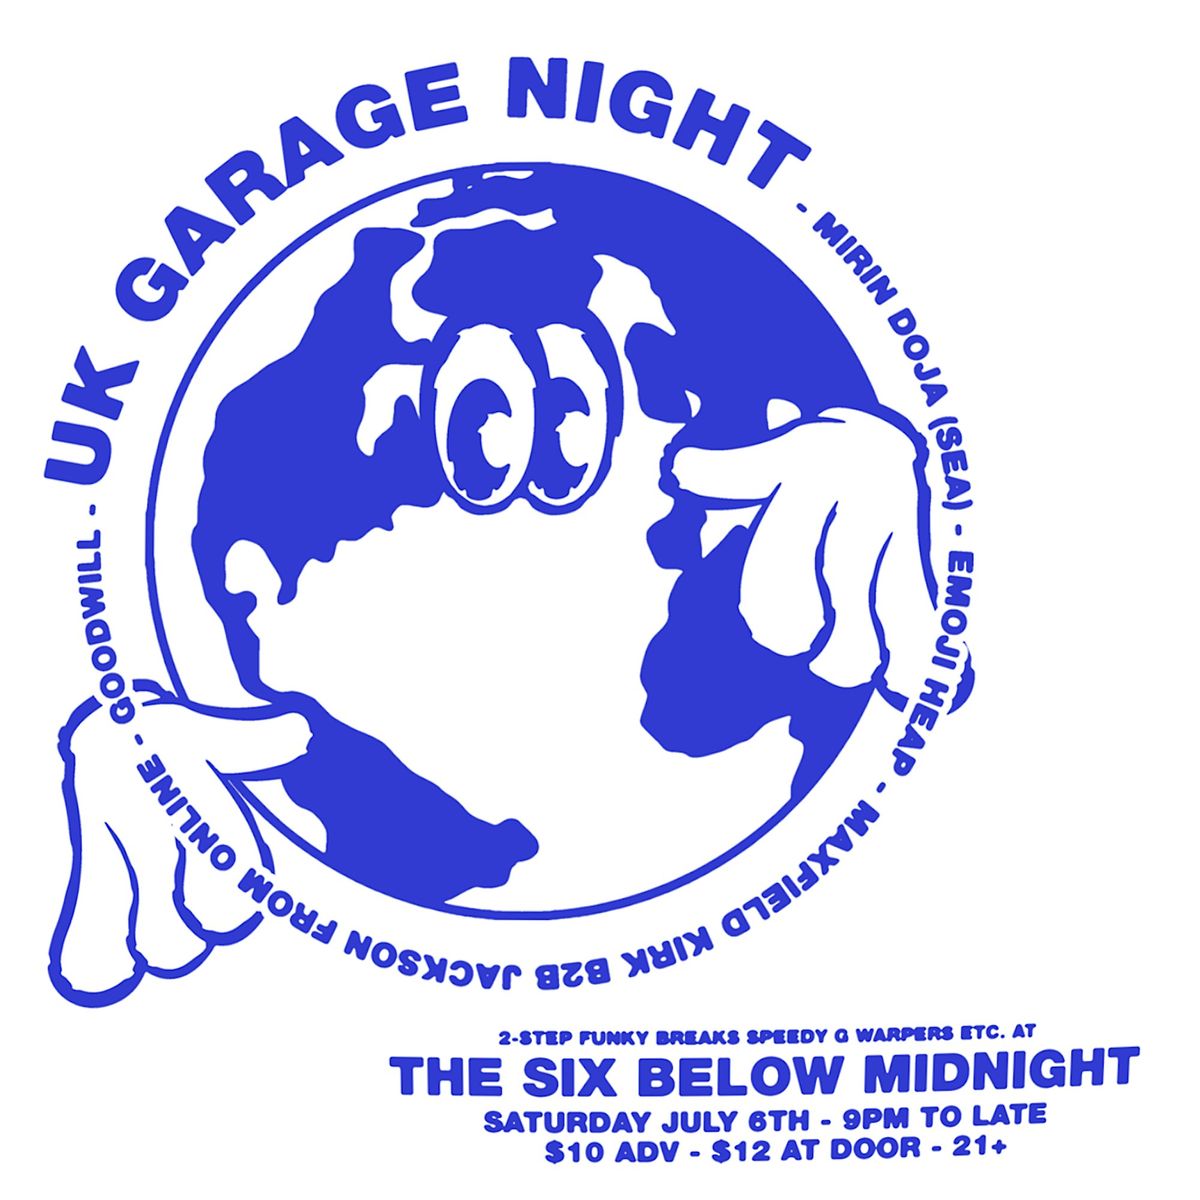 UK GARAGE NIGHT at The Six